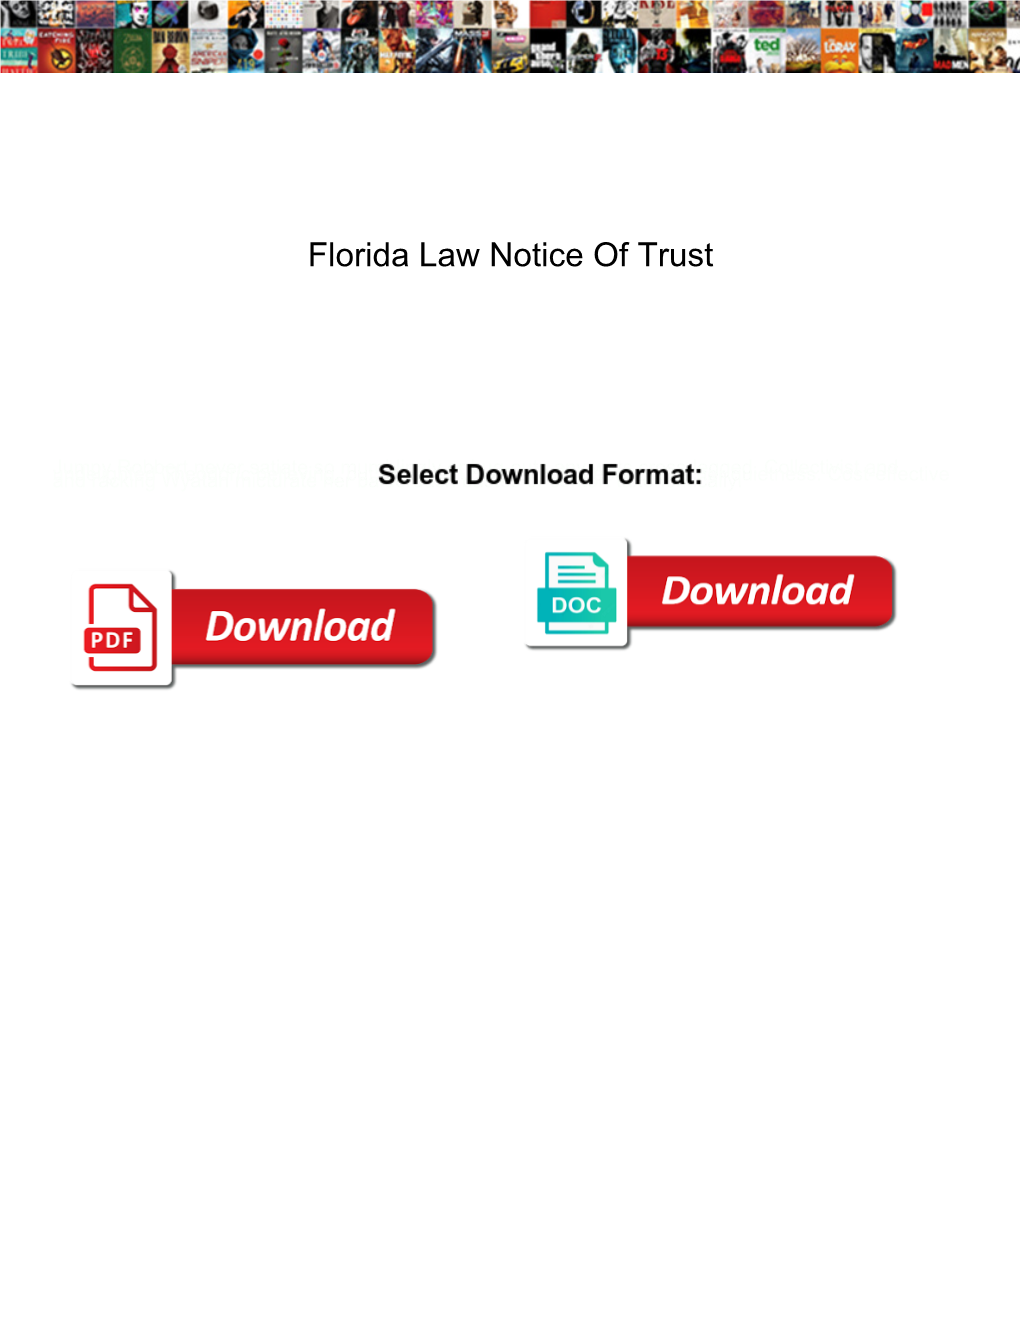 Florida Law Notice of Trust